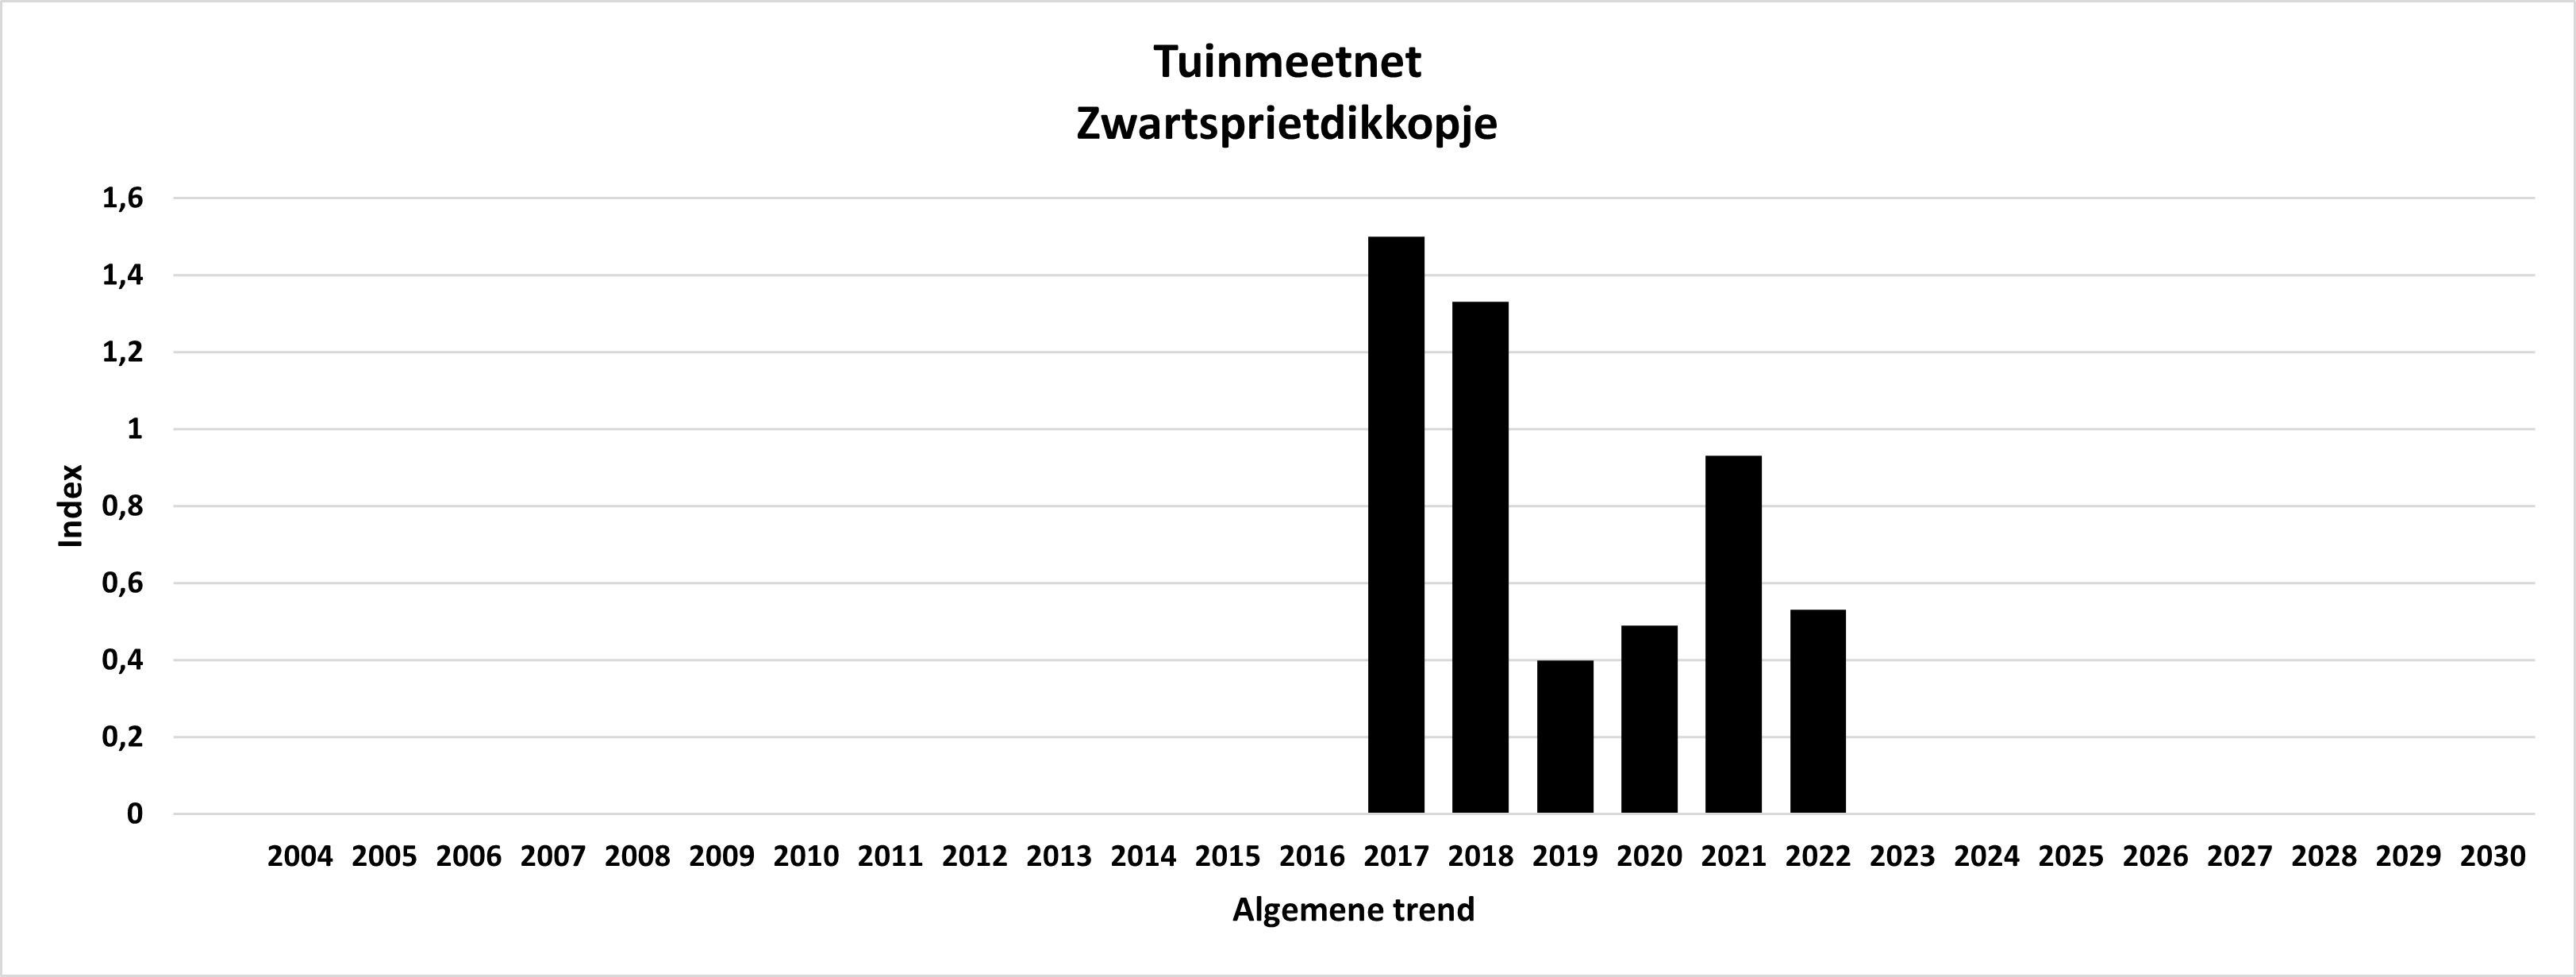 Algemene
                                                        trend
                                                        Zwartsprietdikkopje
                                                        Tuinmeetnet,
                                                        Overall trend
                                                        Essex skipper
                                                        Garden
                                                        monitoring
                                                        network